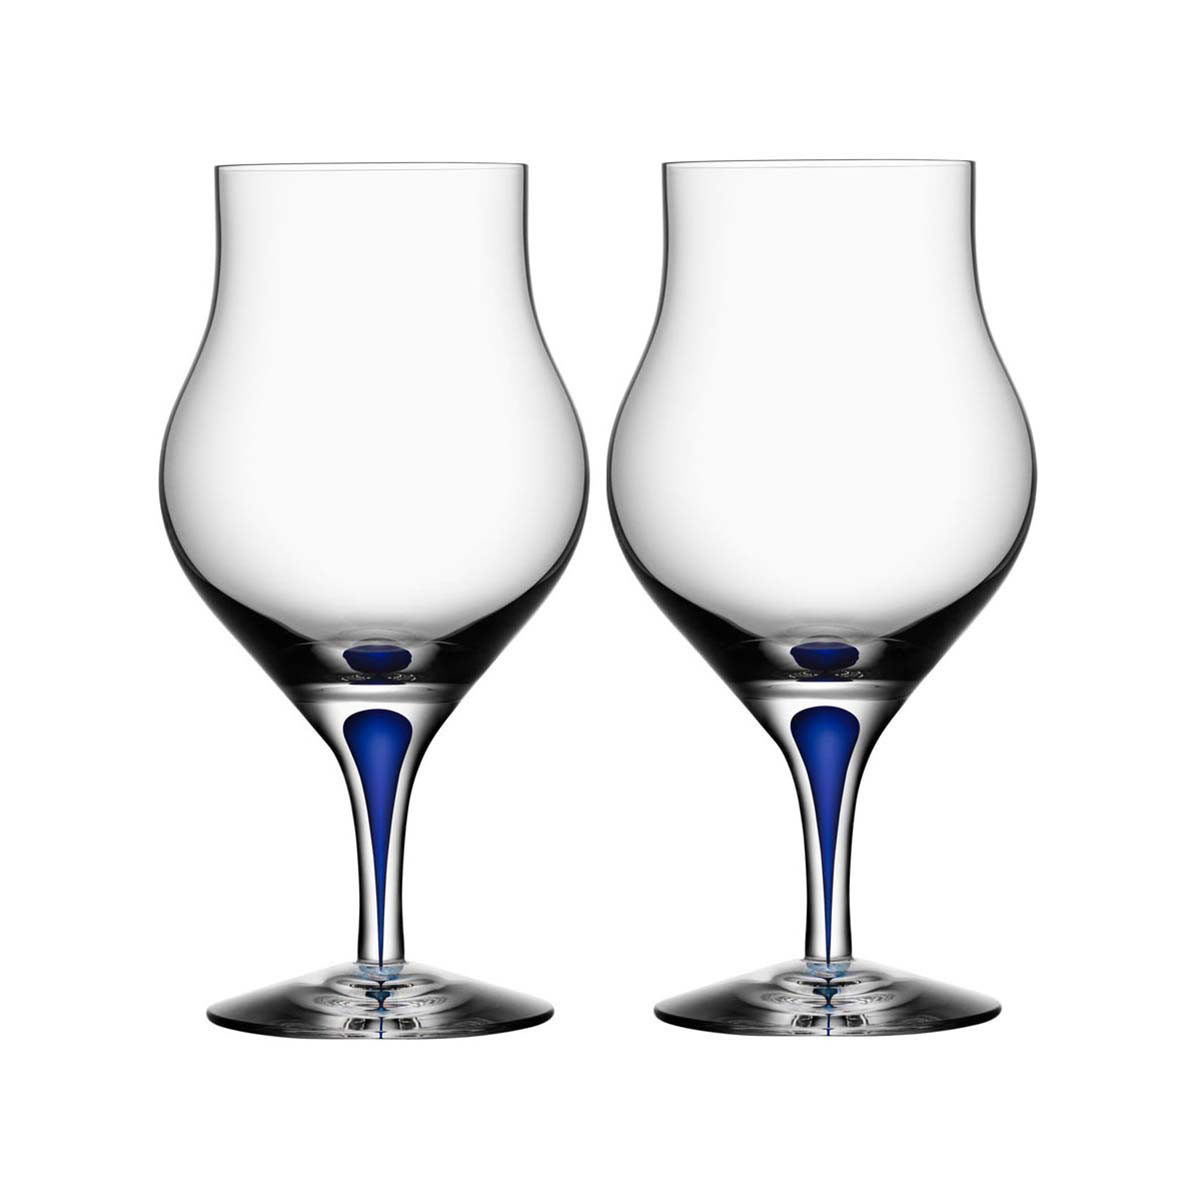 Orrefors Crystal, Intermezzo Blue Cognac Snifter, Pair